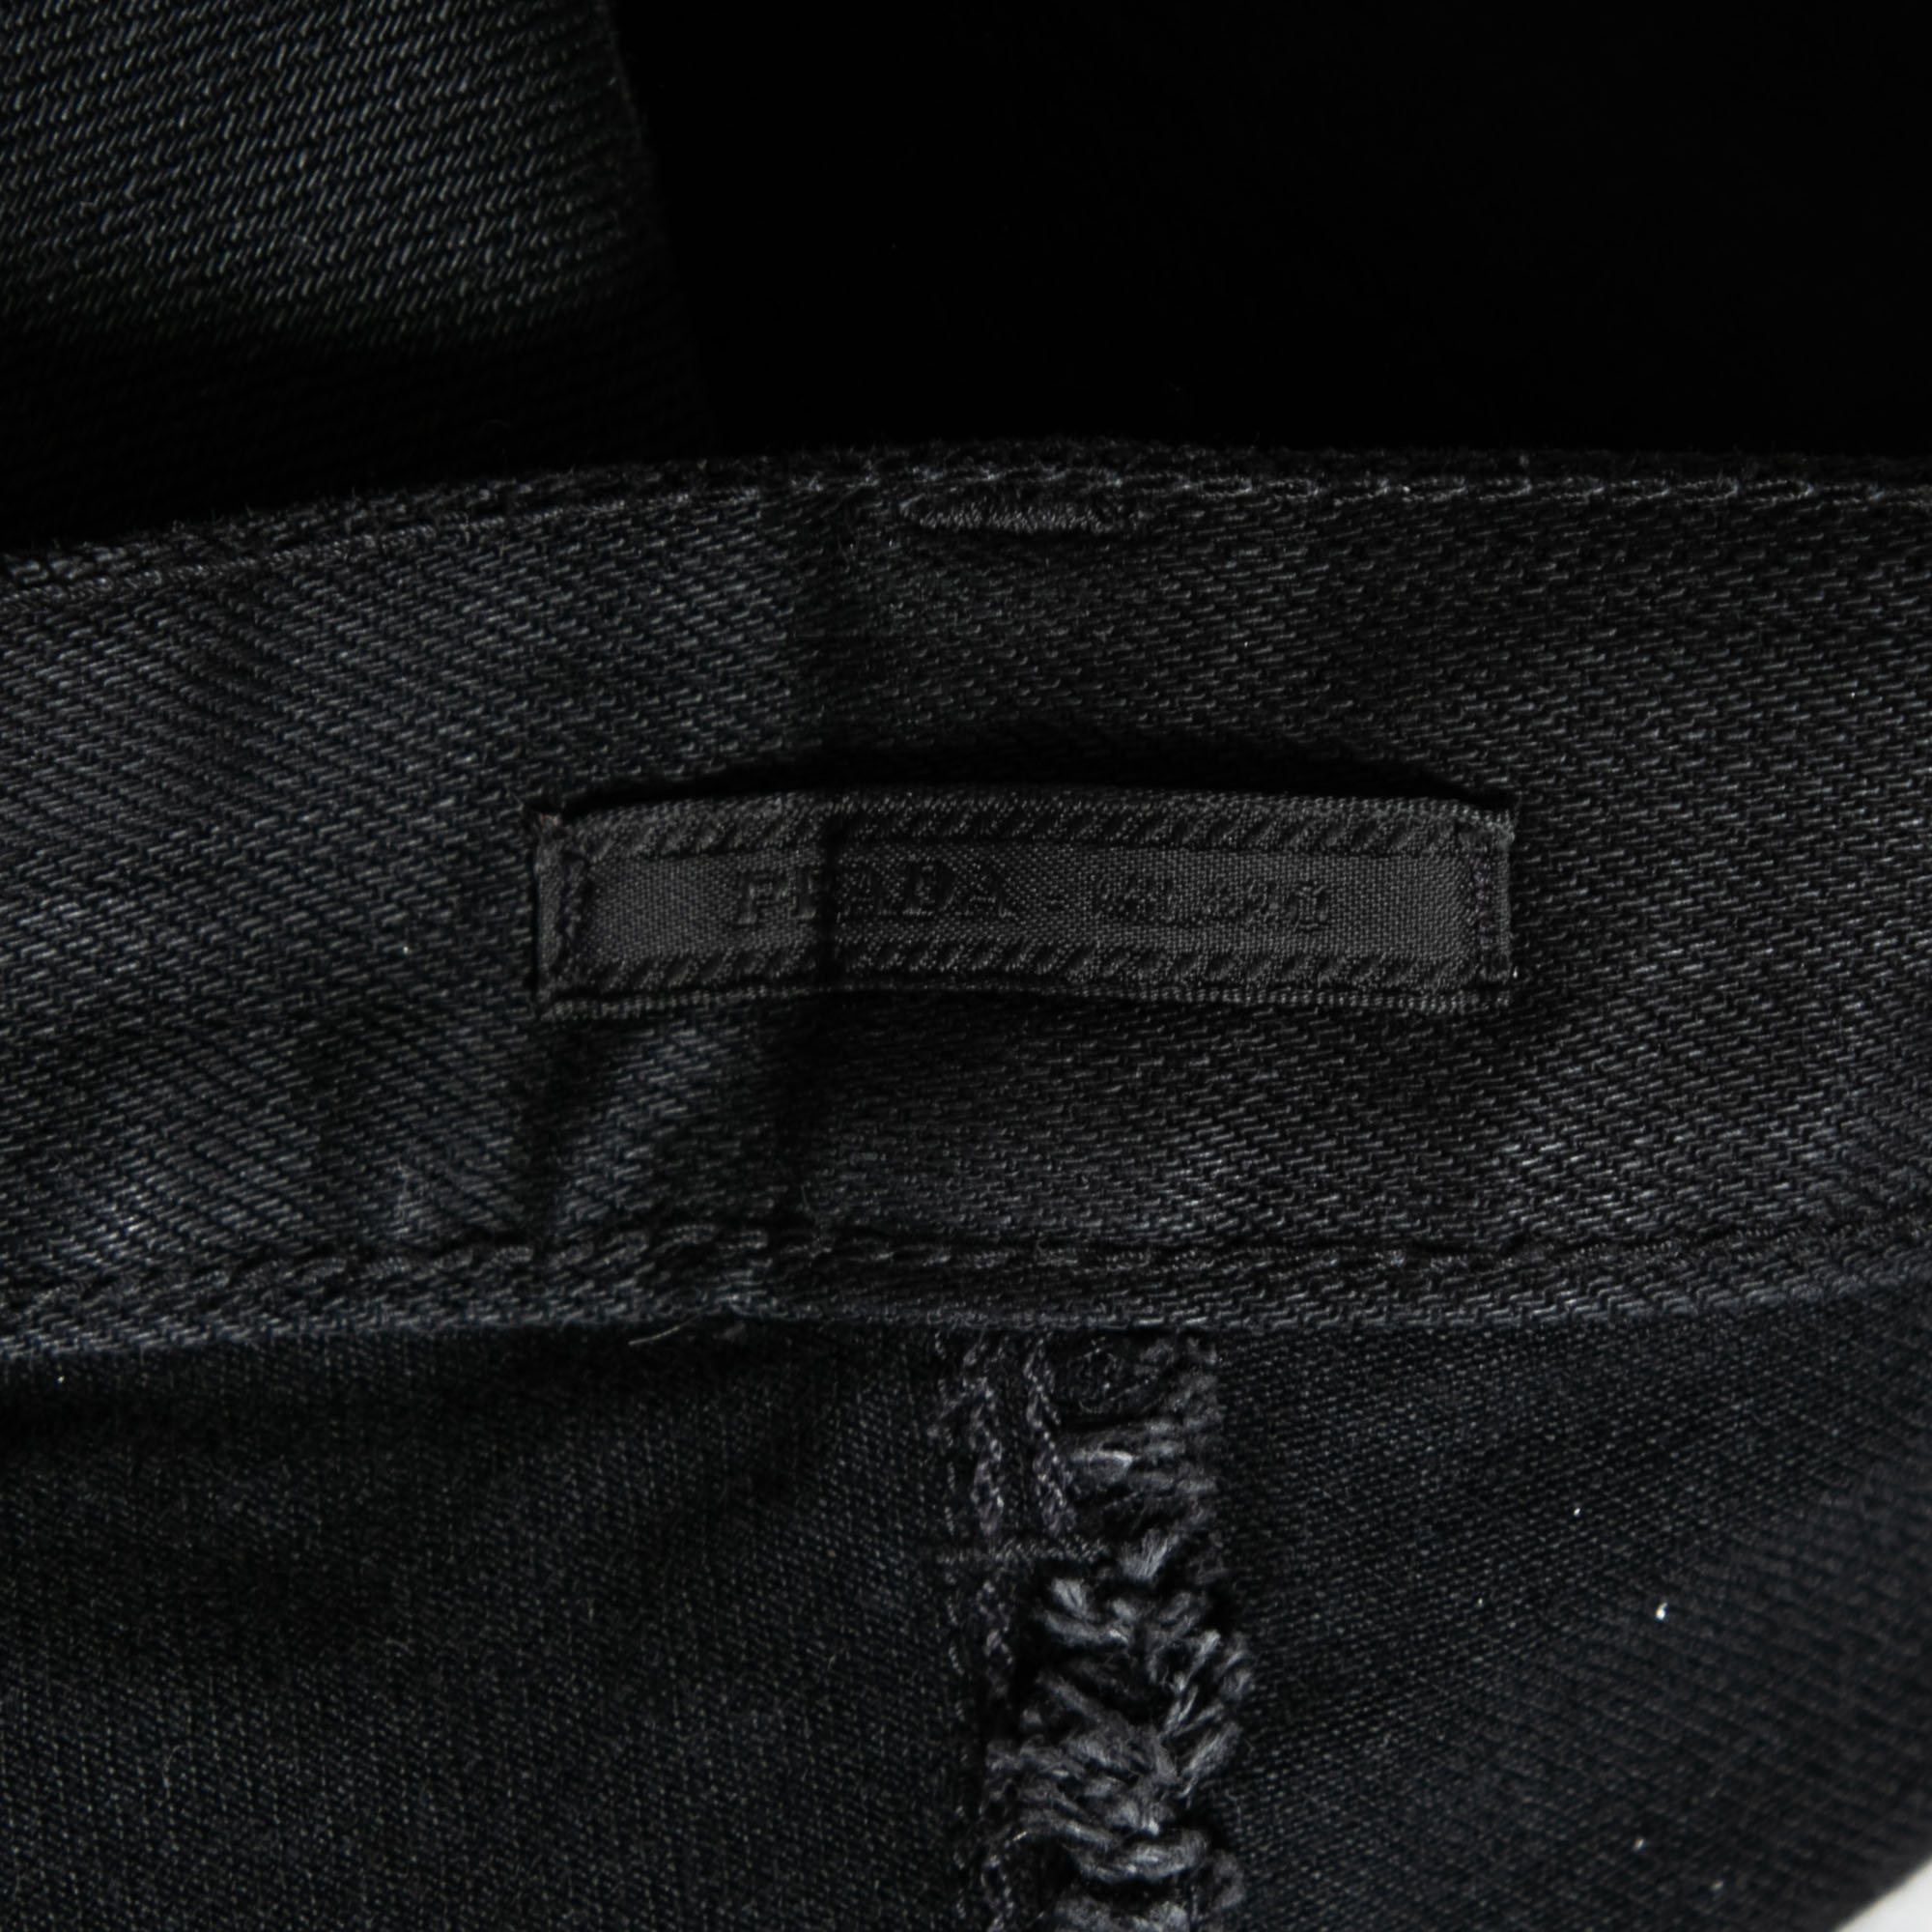 Prada Black Denim Tapered Fit Jeans M